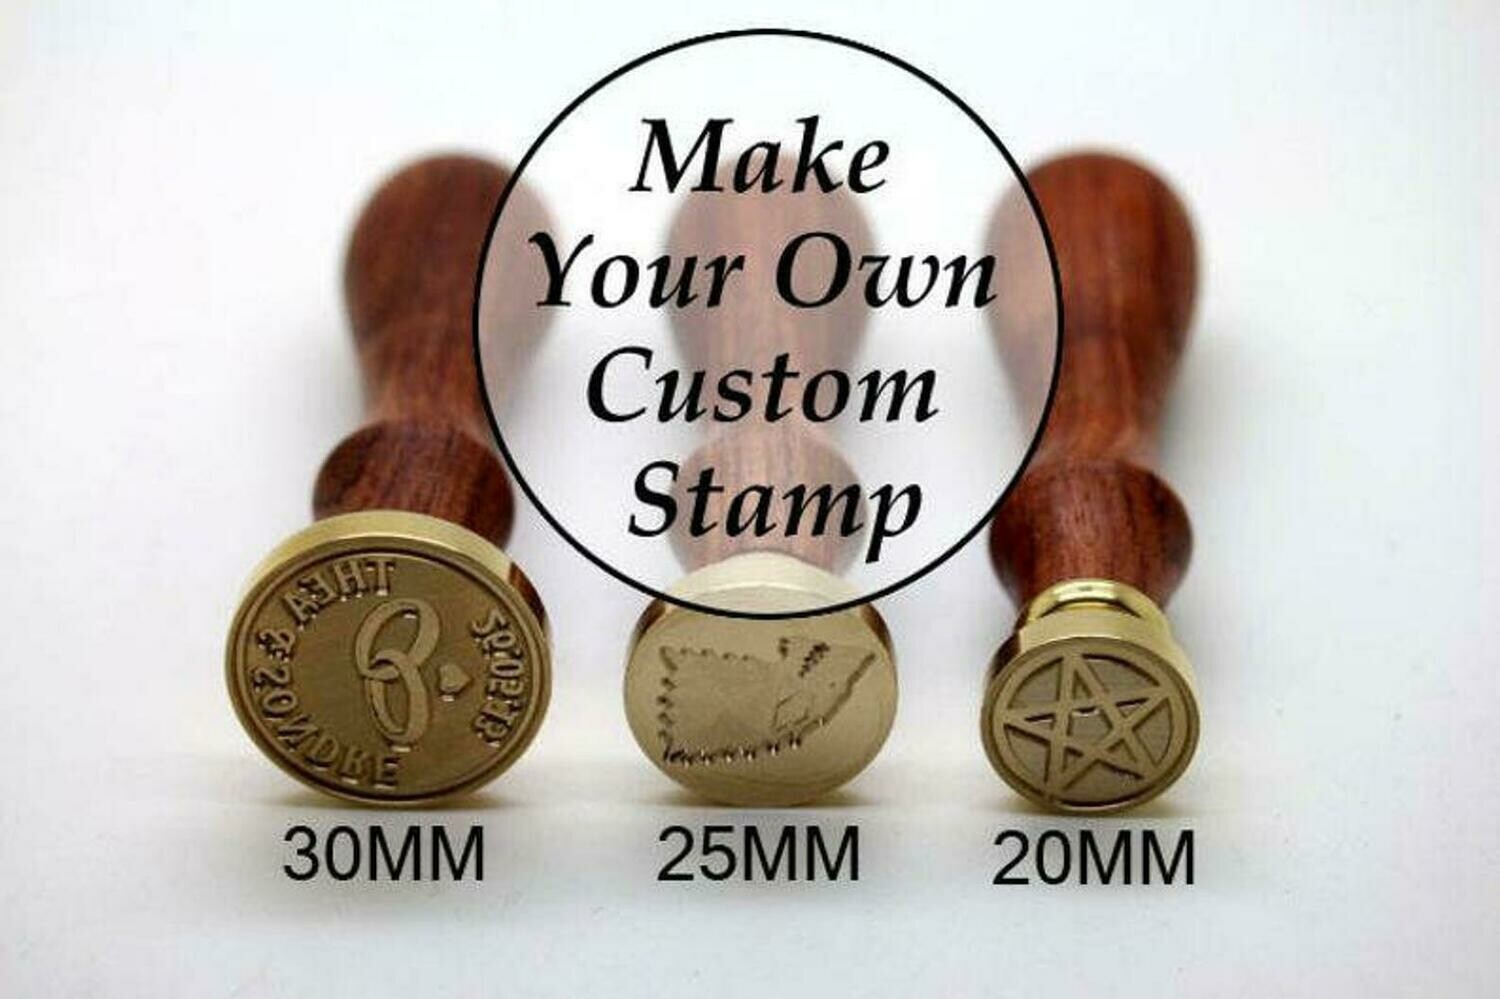 Custom logo Sealing Wax Seal Stamp, Personalized Monogram Calligraphy Wedding Invitation Letter Metal Stamp-Wax Seal Stamp logo Personalized image custom sealing wax sealing stamp -